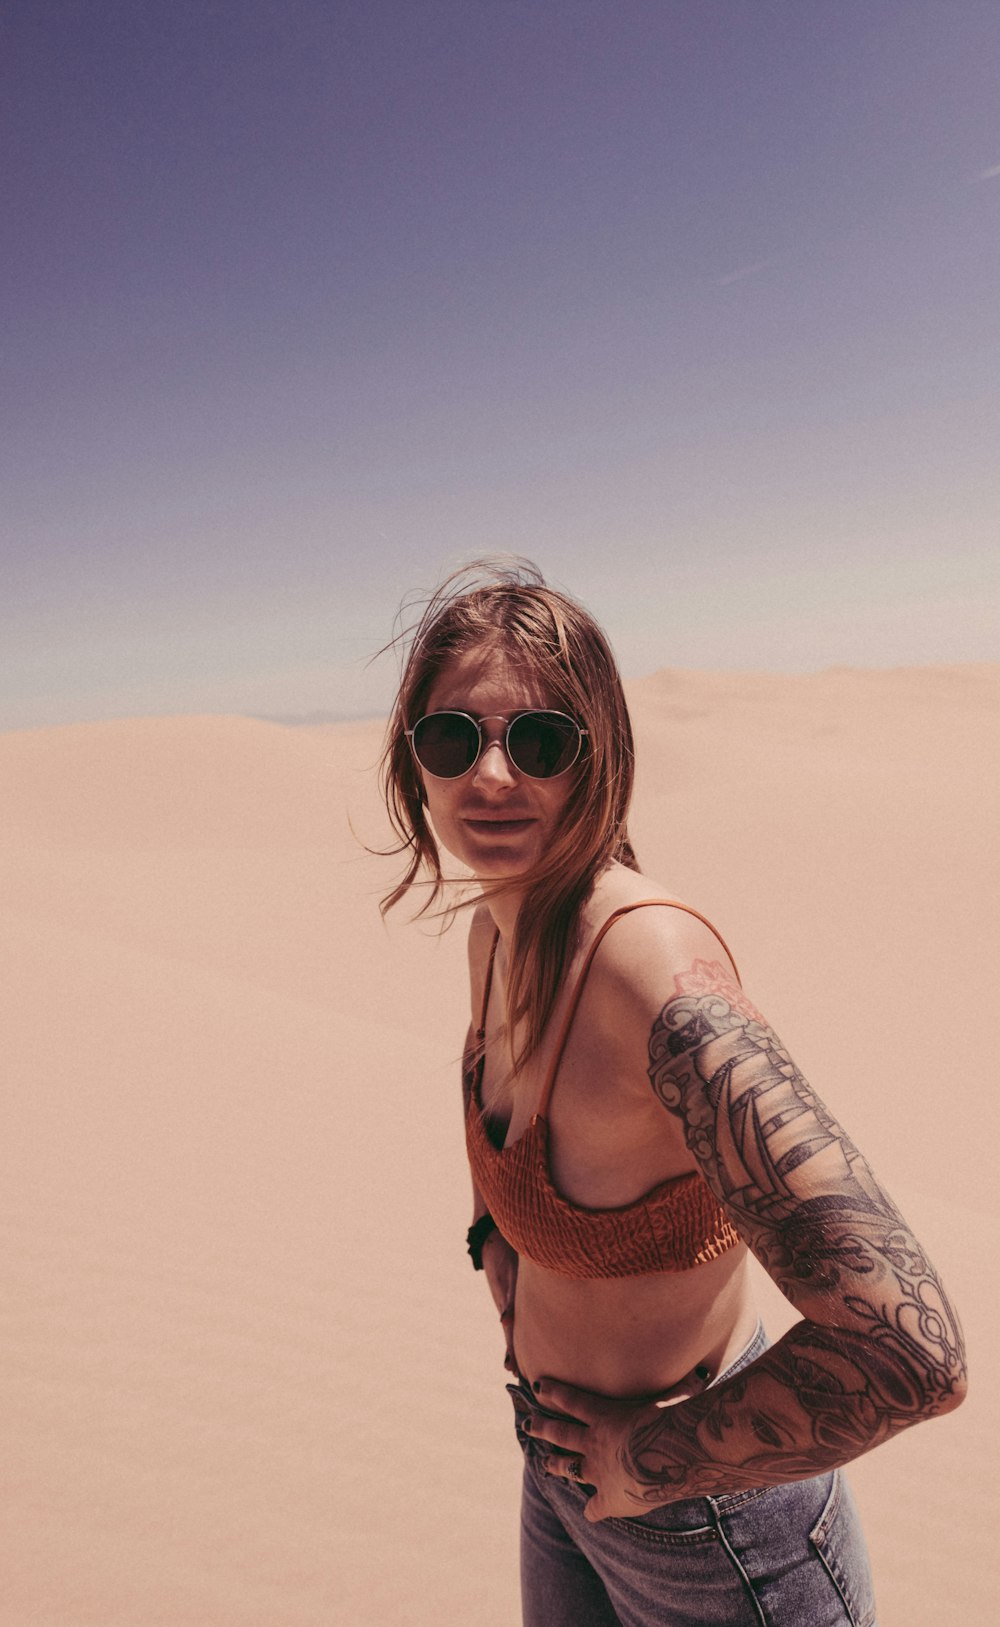 woman in knitted bra on desert